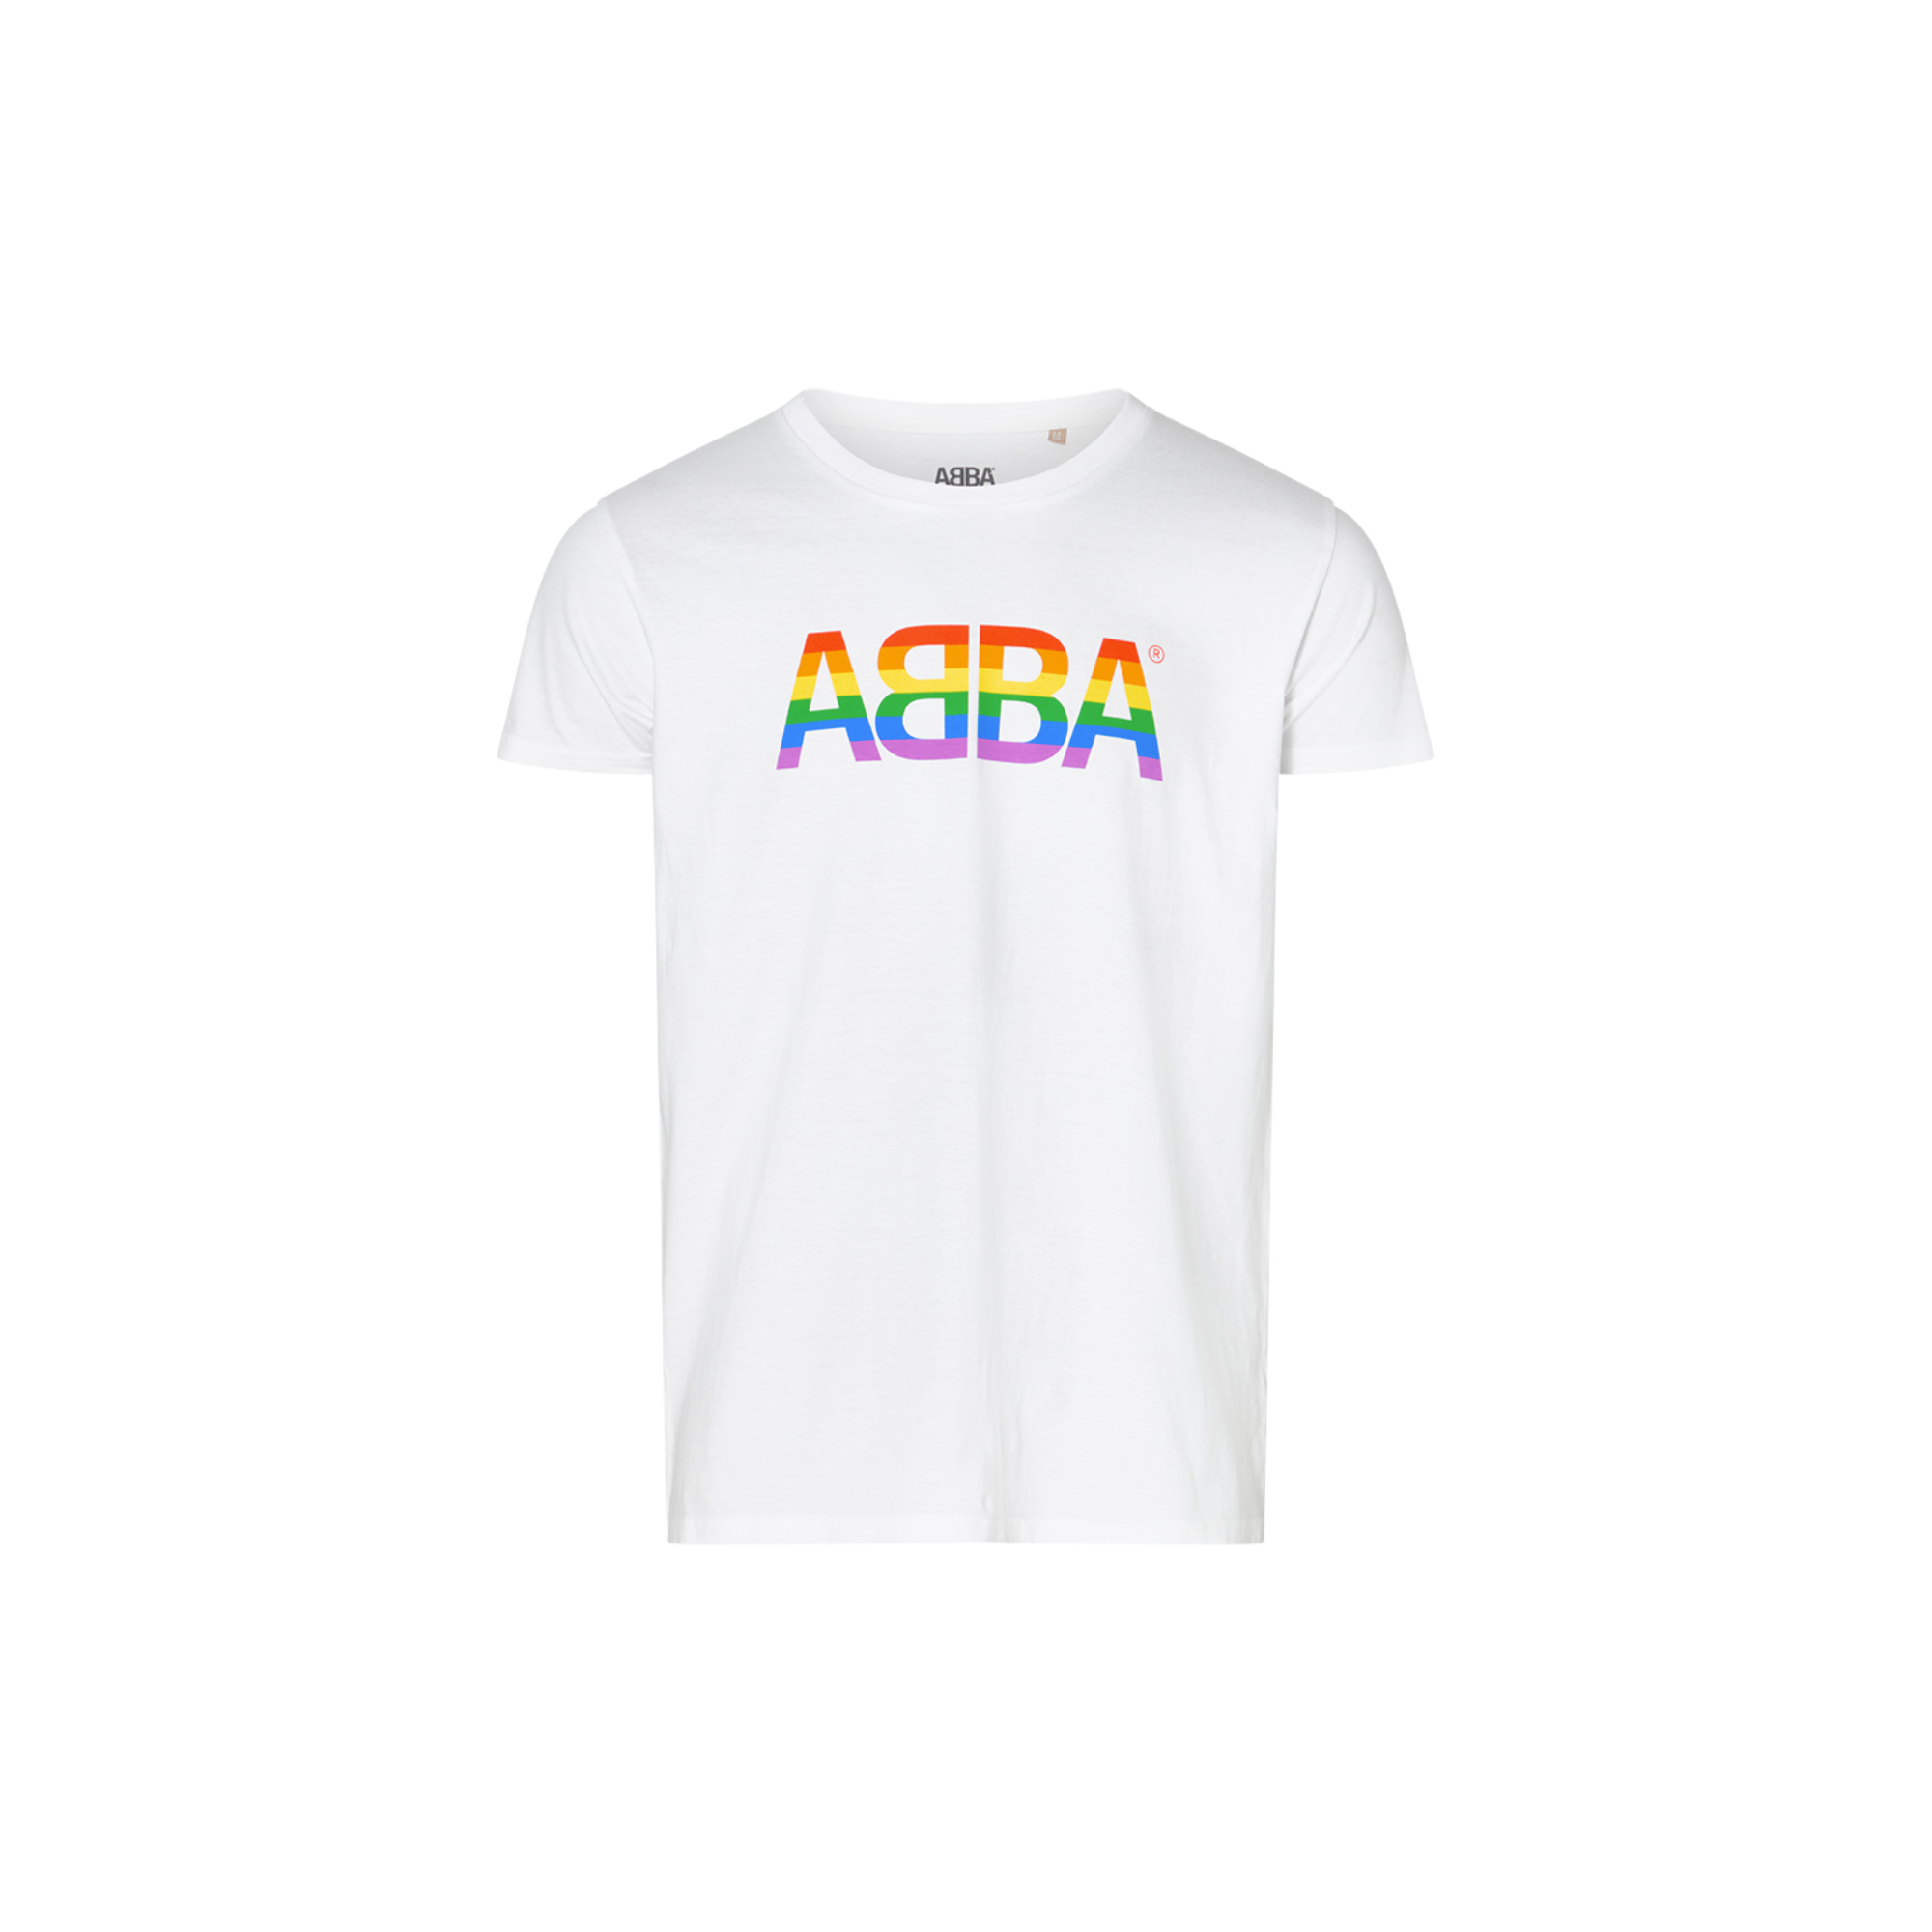 ABBA Pride t-shirt